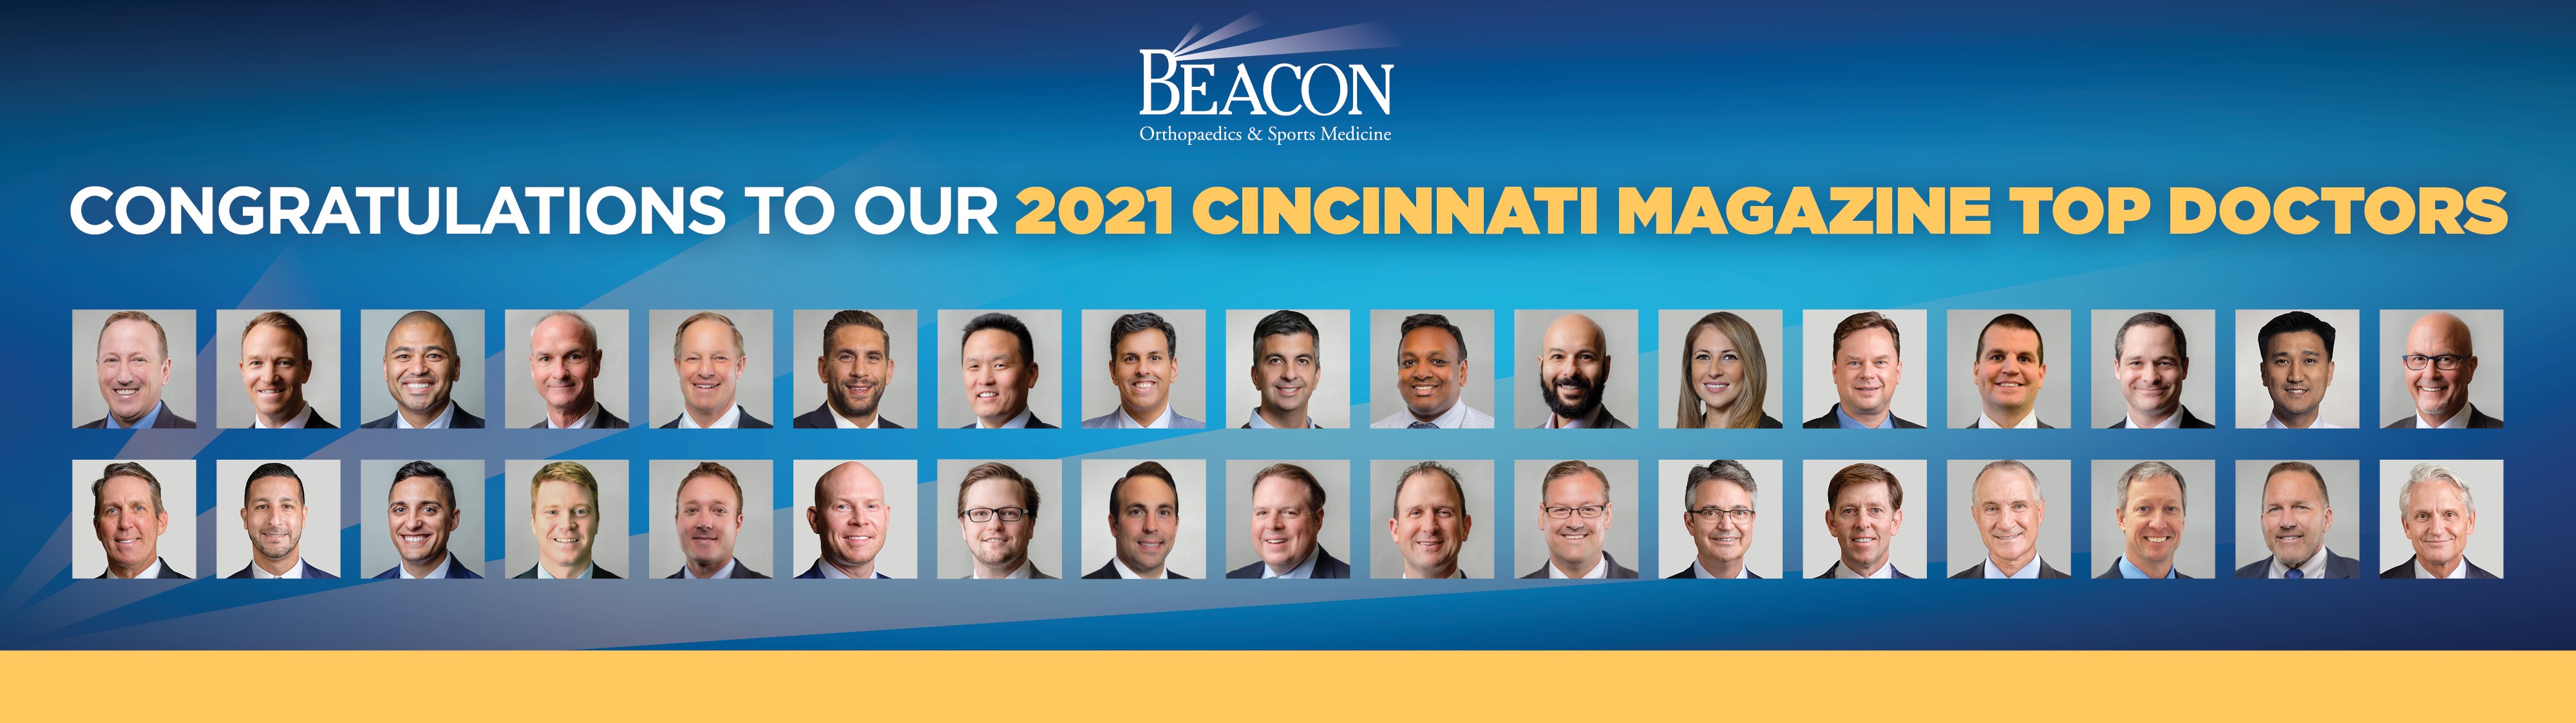 Top Doctors 2021 at Beacon